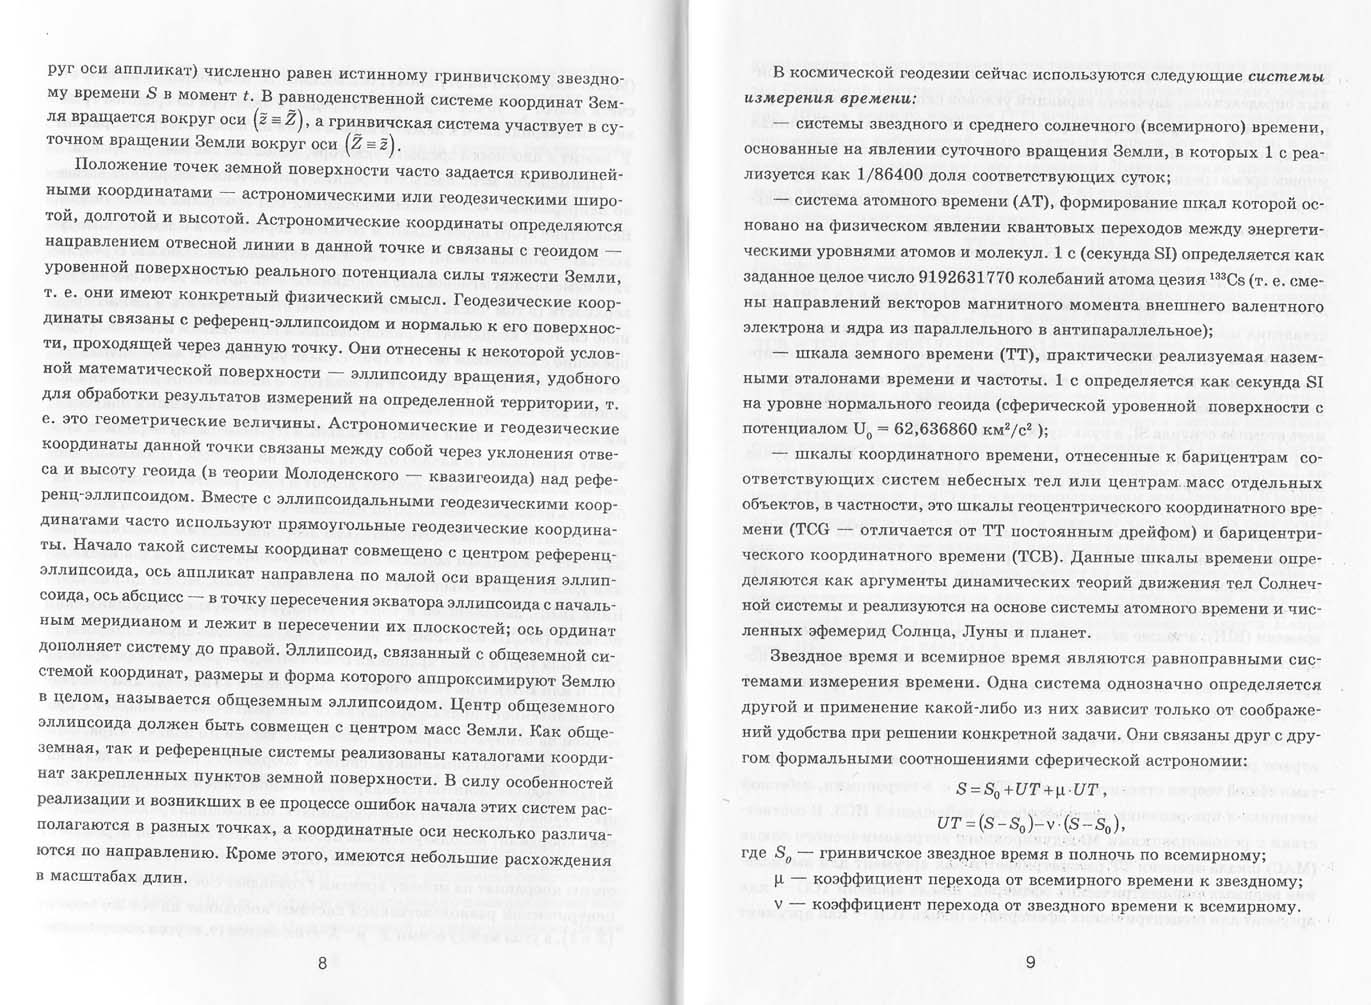 страницы 8-9